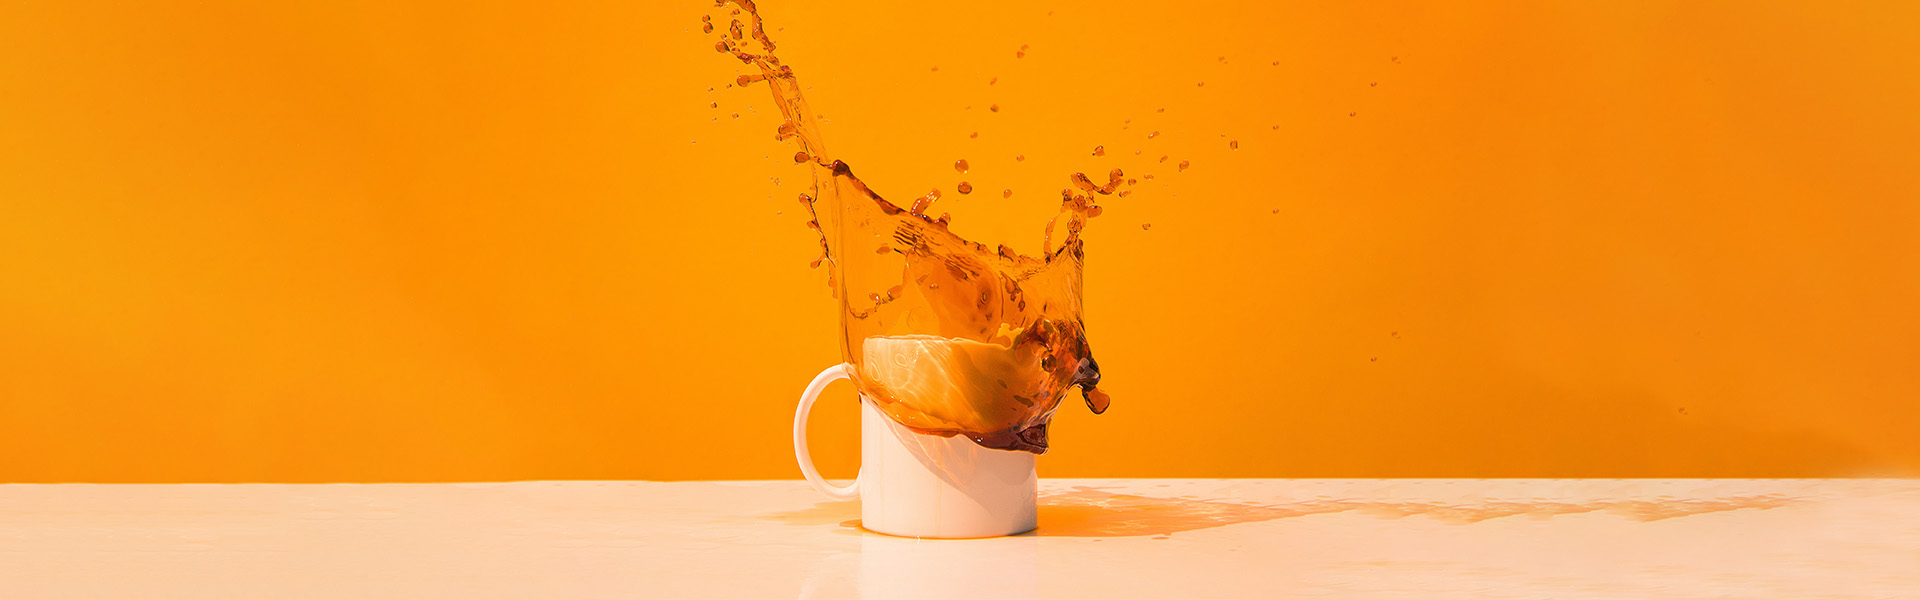 coffee mug with coffee splash against orange background